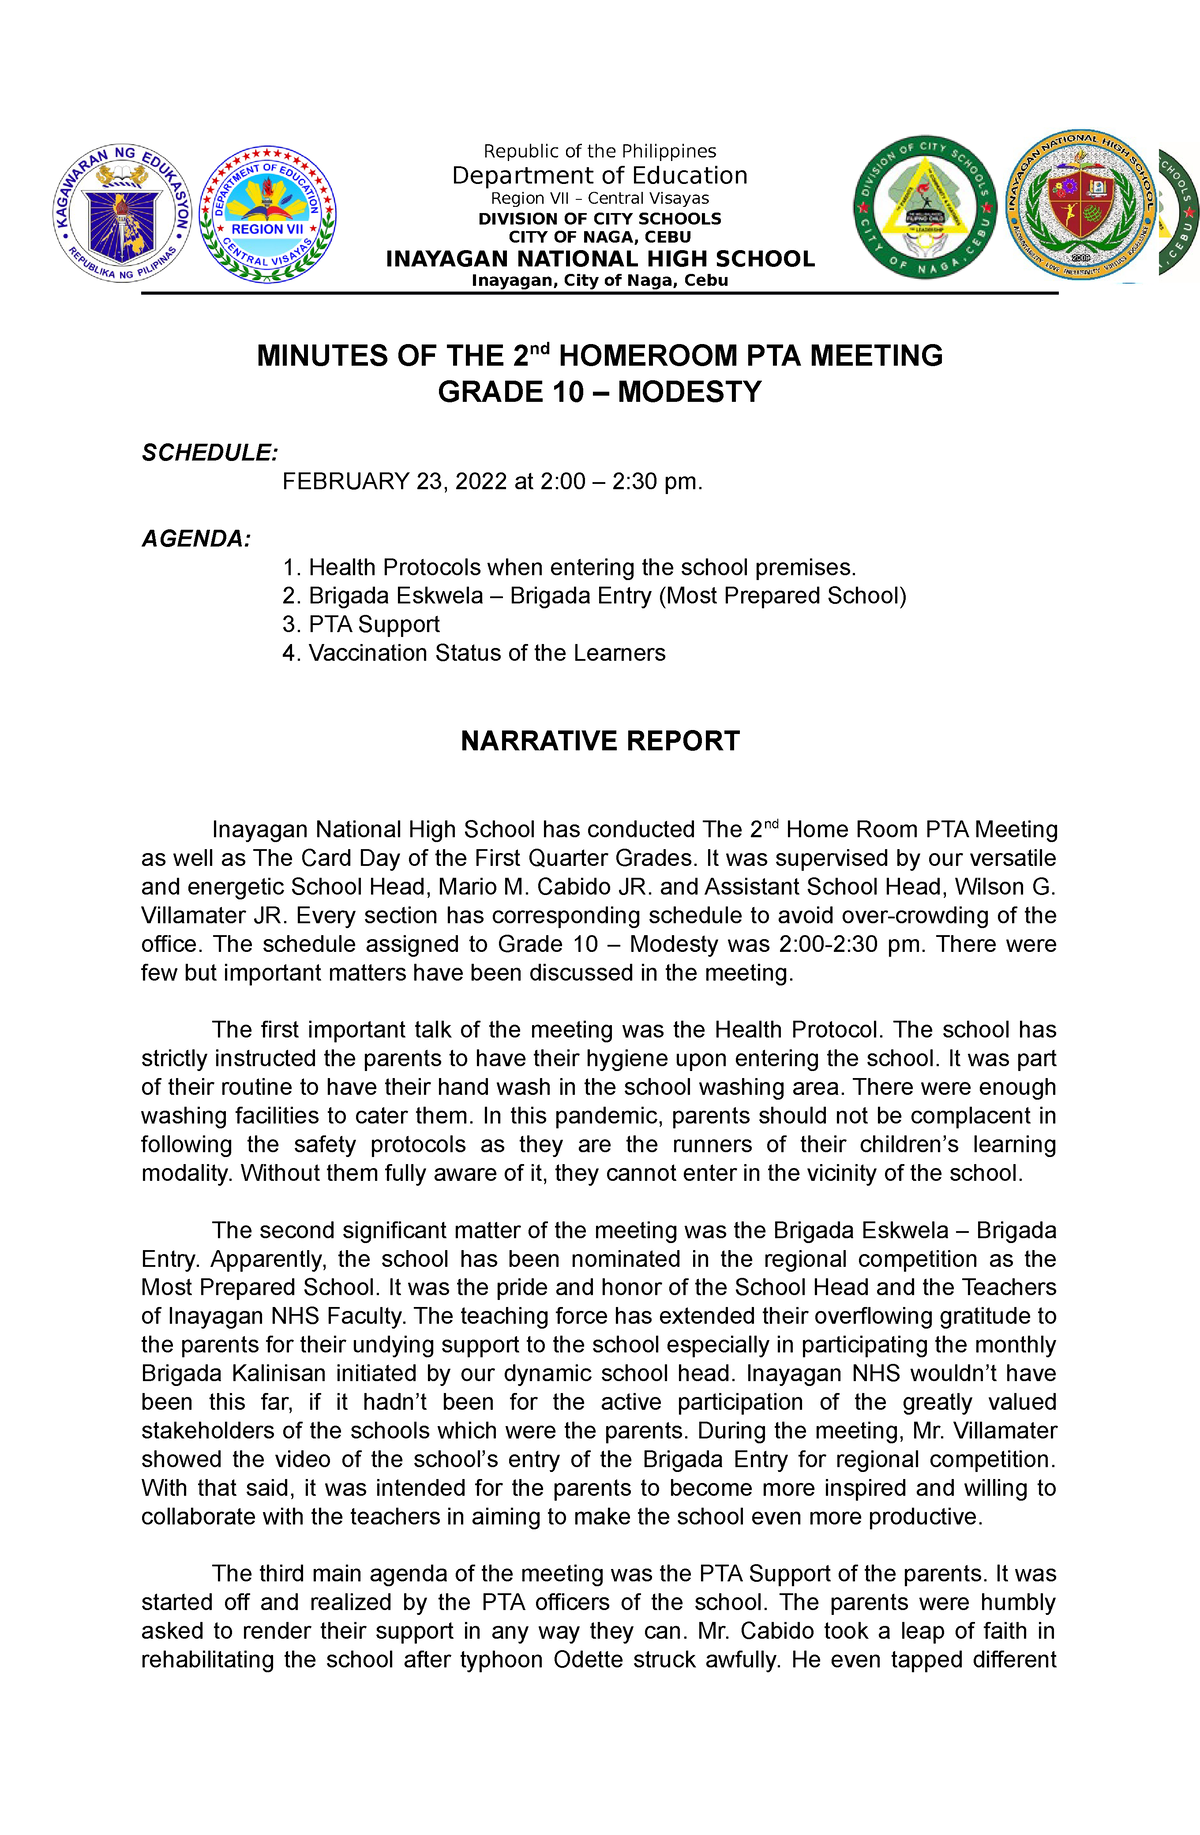 Narrative Report Pta Meetings Republic Of The Philippines Department